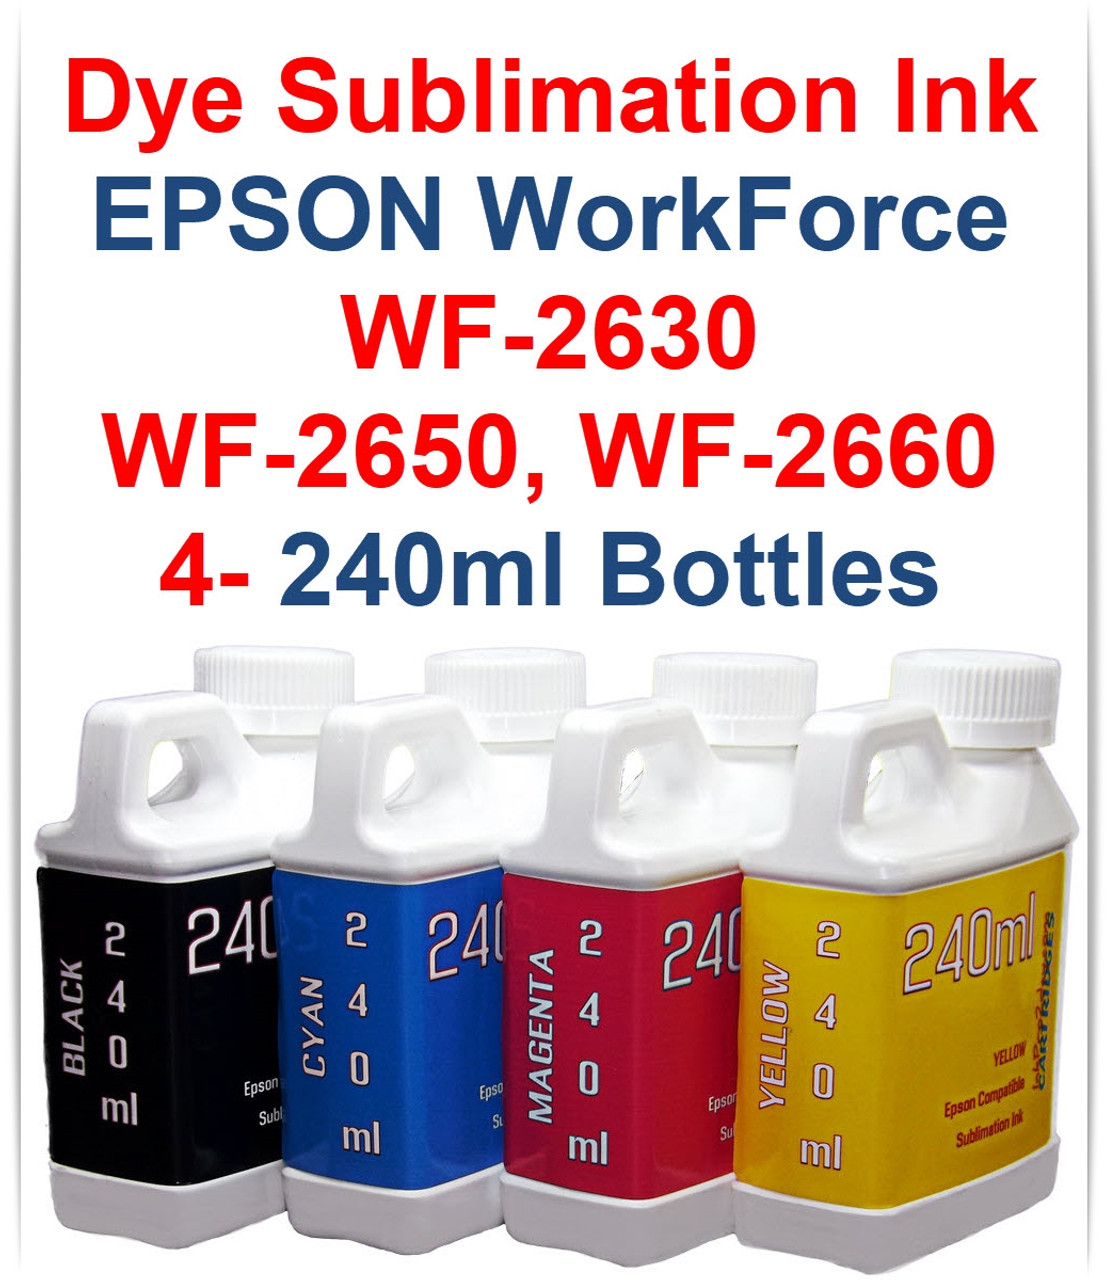 4- 240ml bottles Dye Sublimation Ink for Epson WorkForce WF-2630 WF-2650 WF-2660 Printers